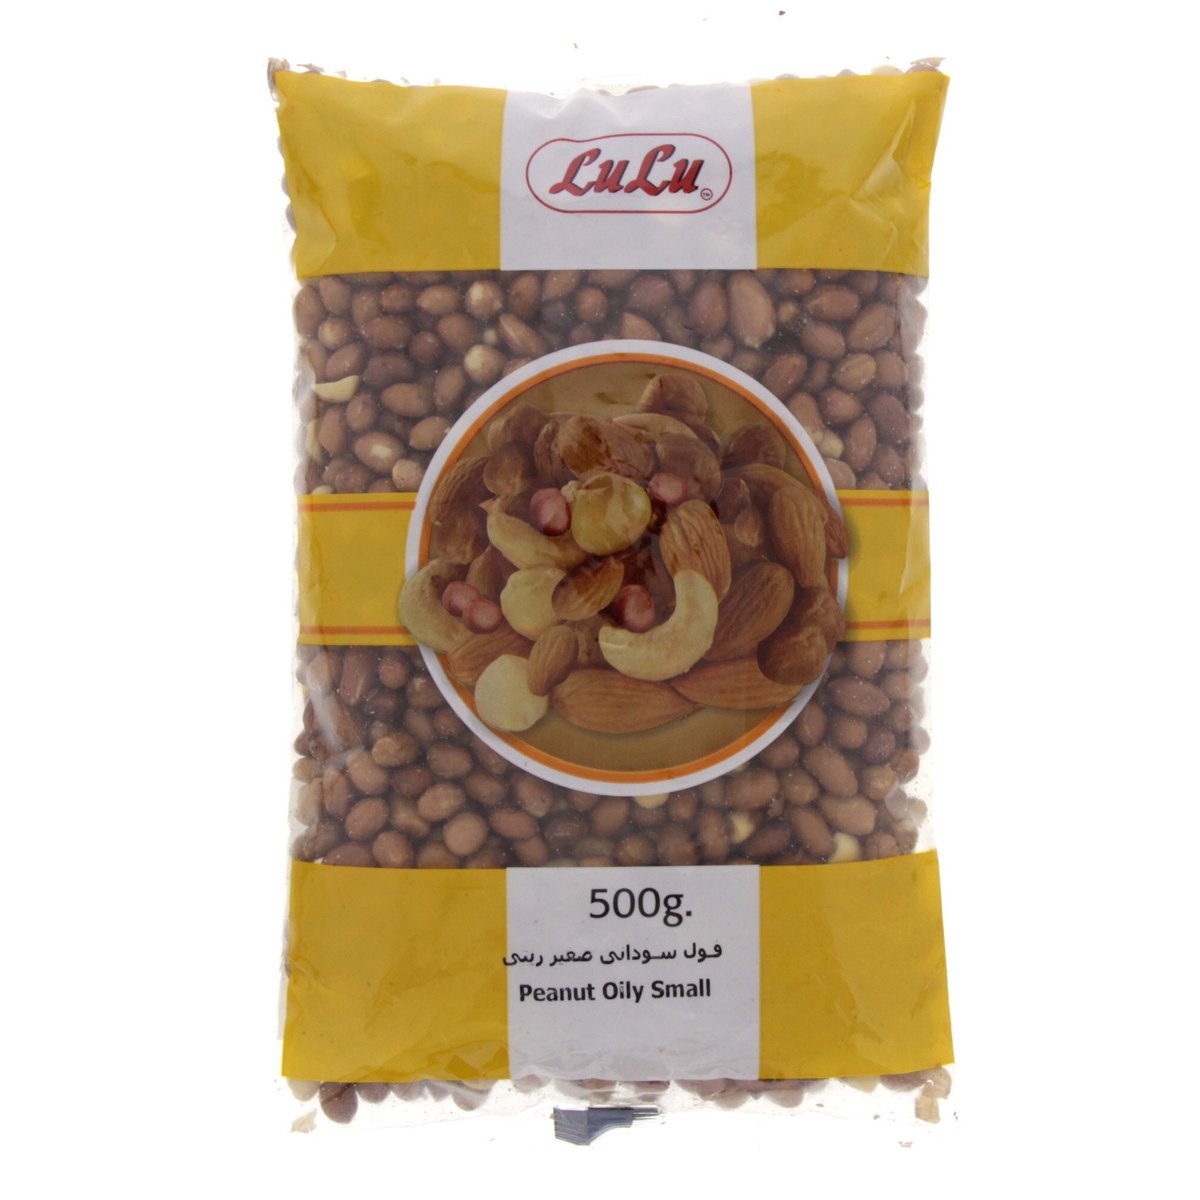 LuLu Peanut Oily Small 500 g